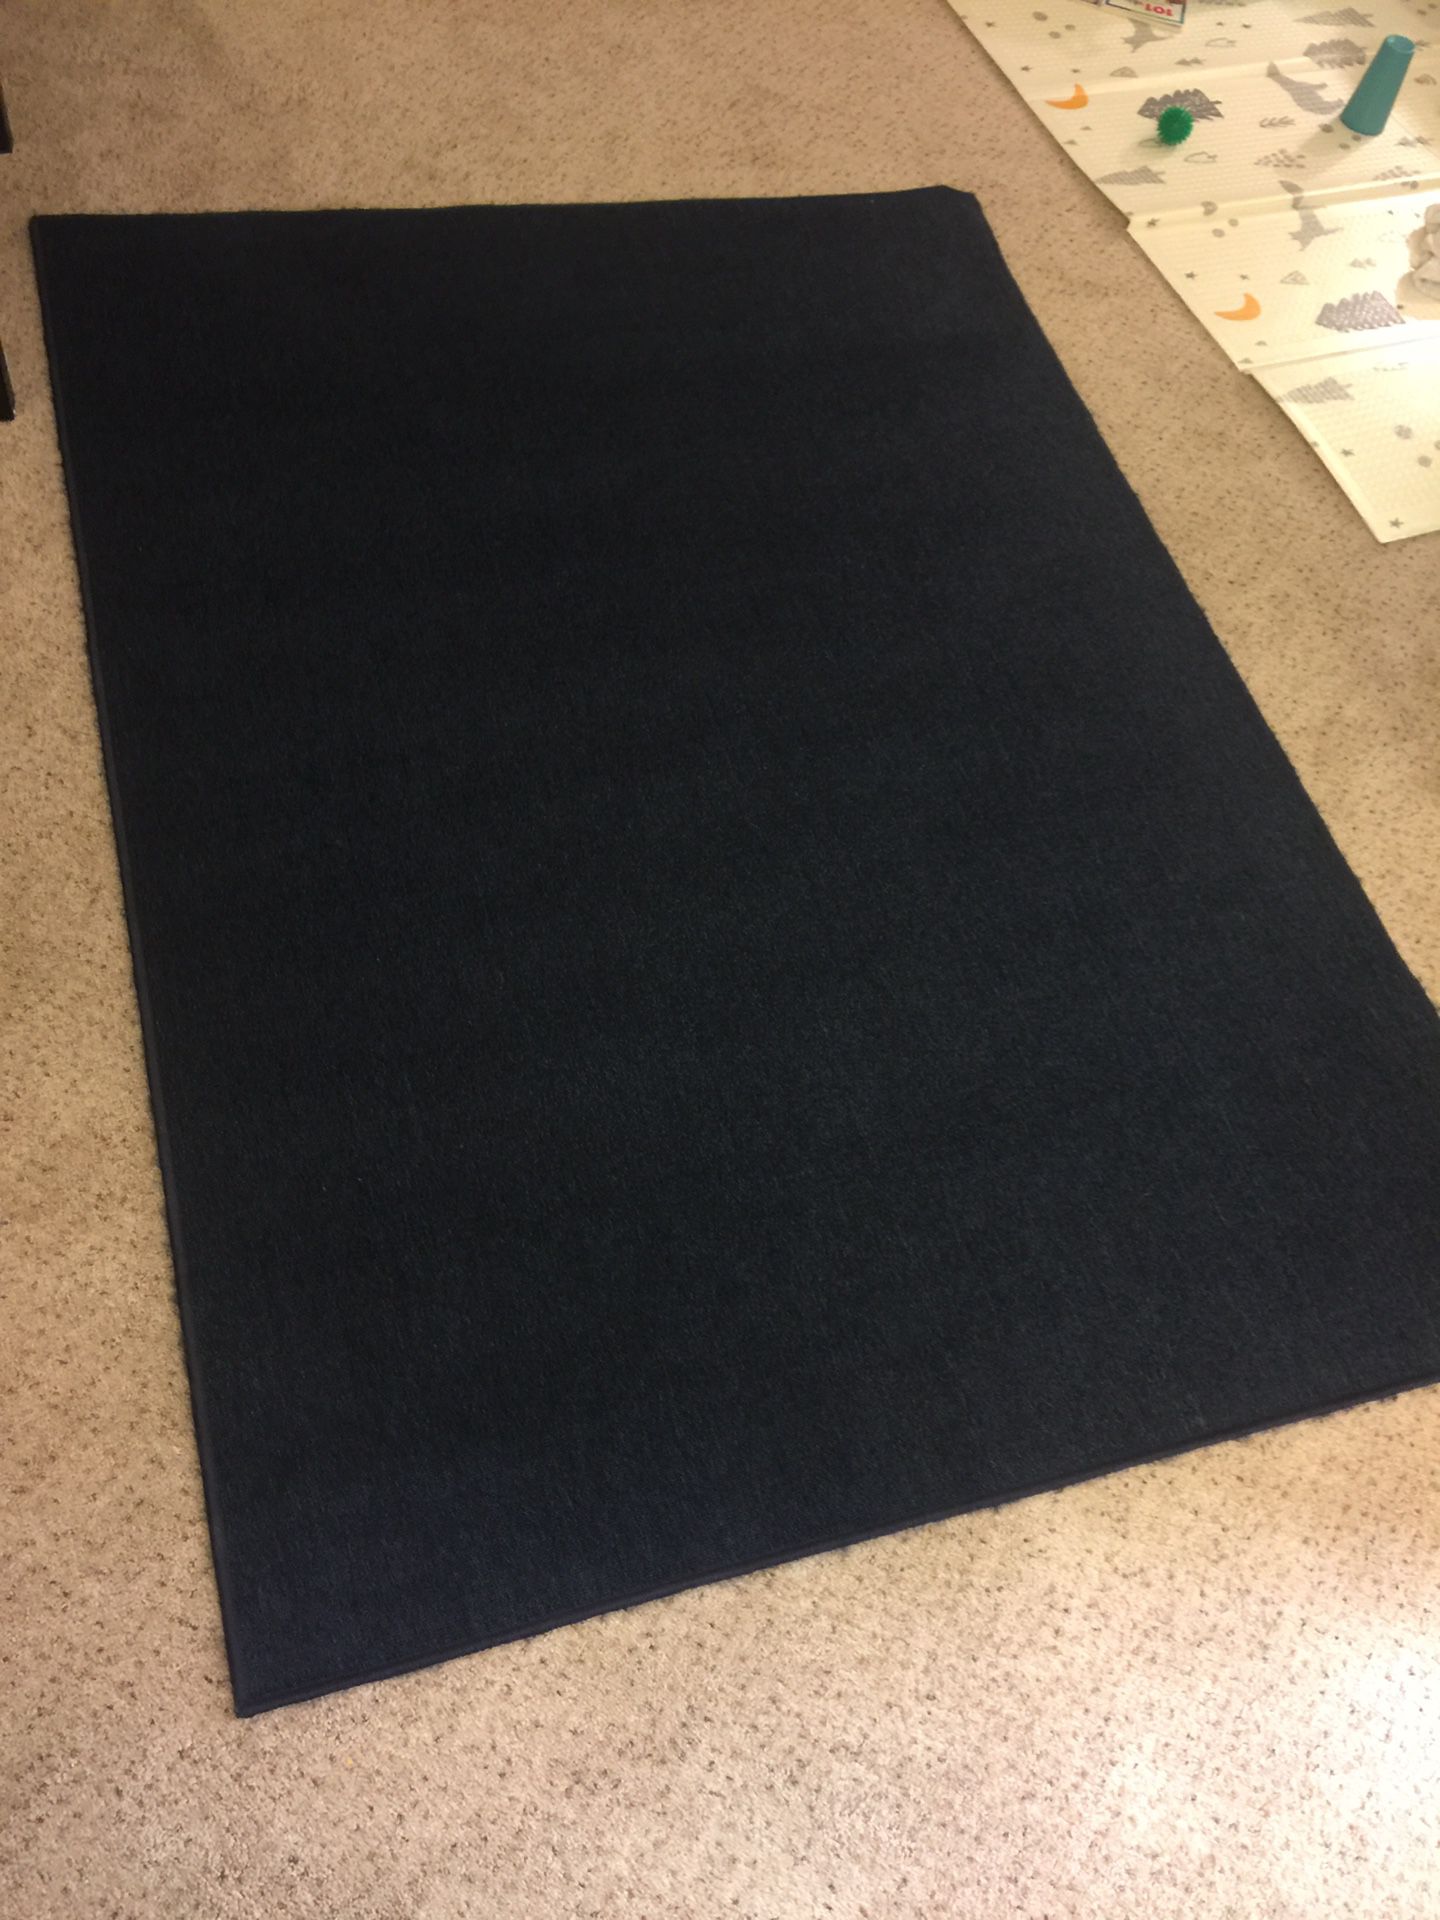 Dark blue carpet